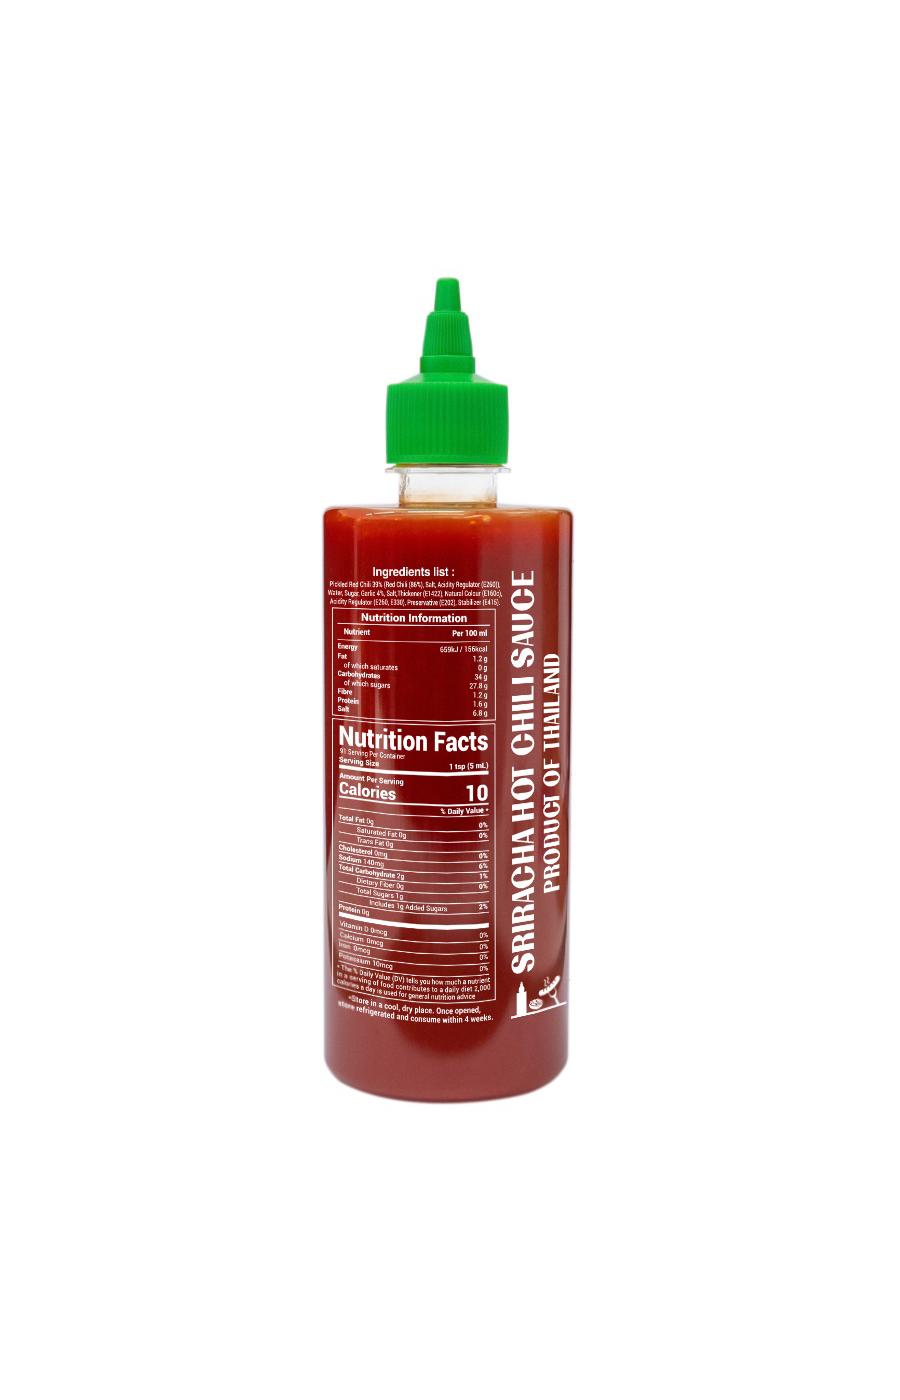 J Lek Sriracha Hot Chili Sauce; image 3 of 3